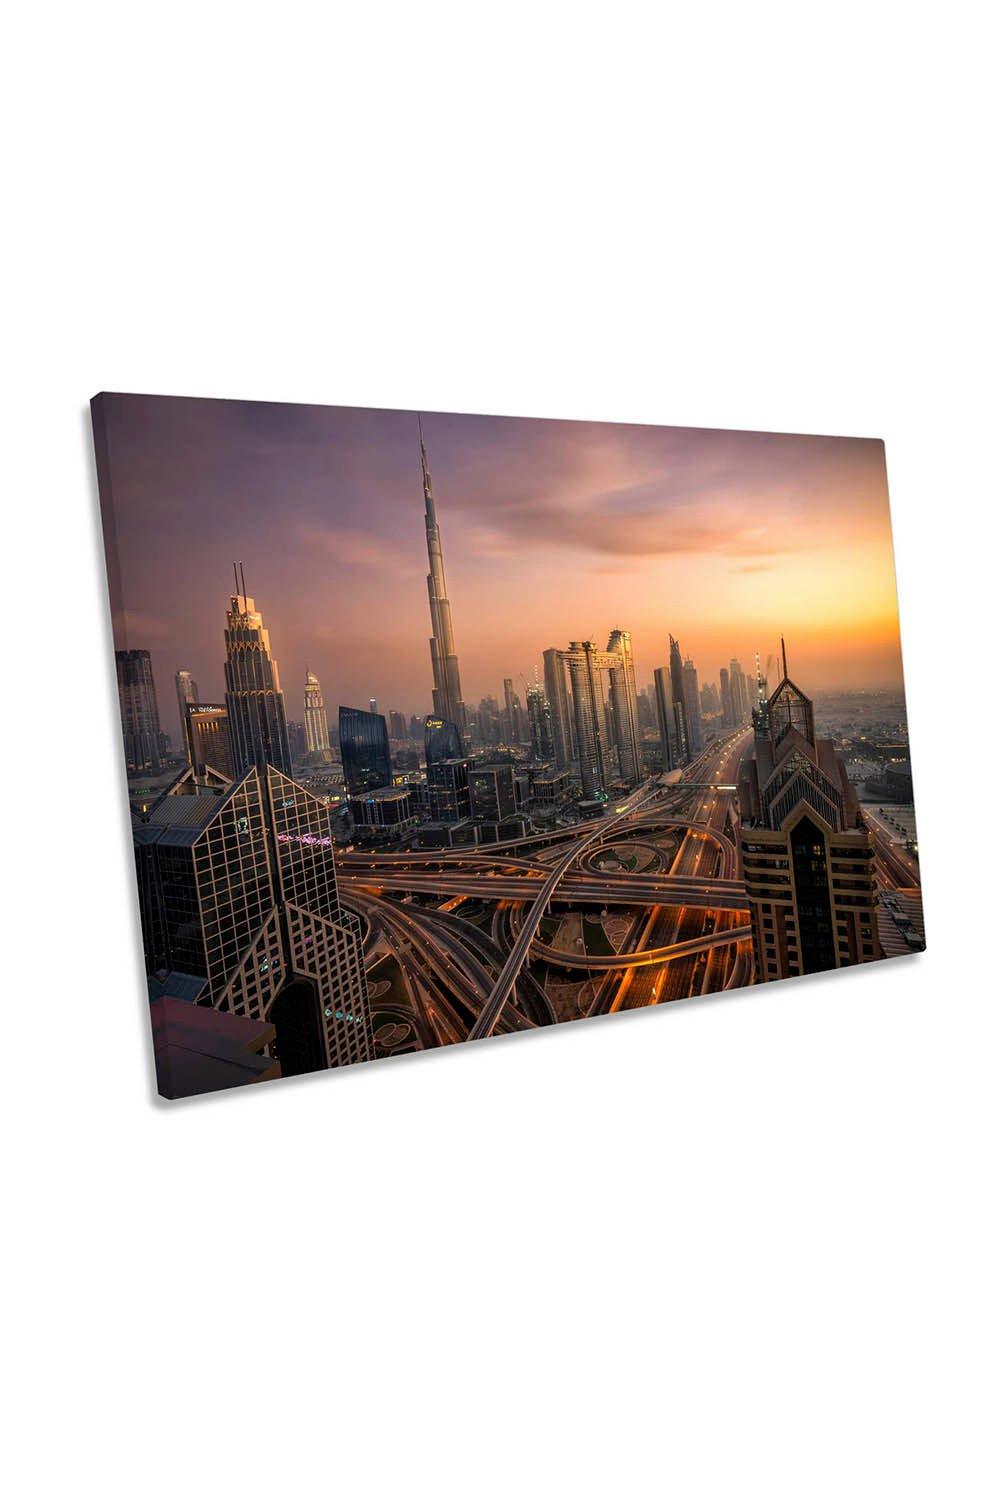 City of Giants Dubai Sunset Orange Skyline Canvas Wall Art Picture Print